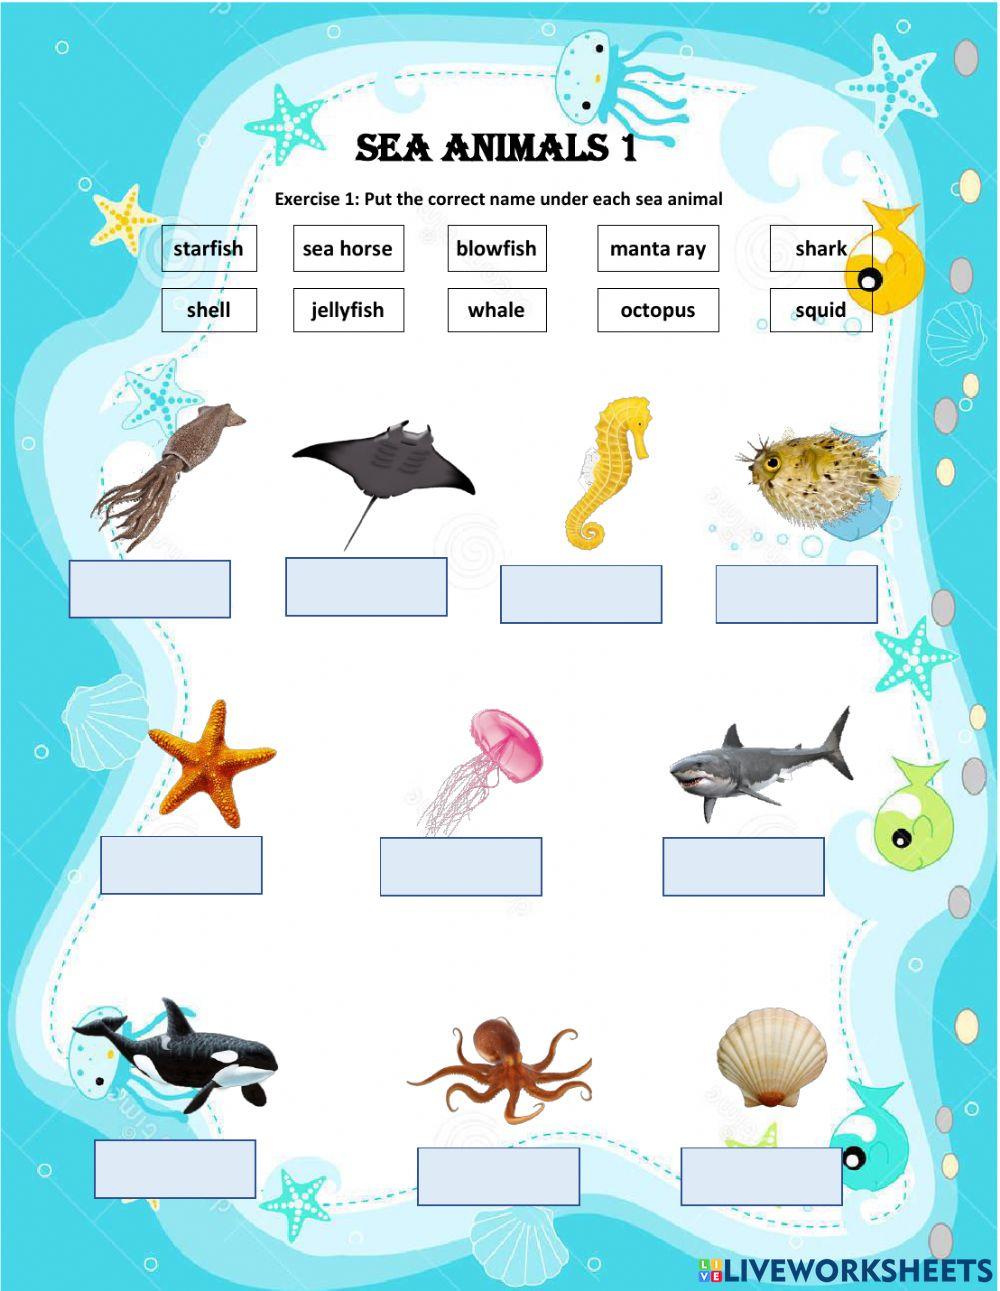 Sea animals 1